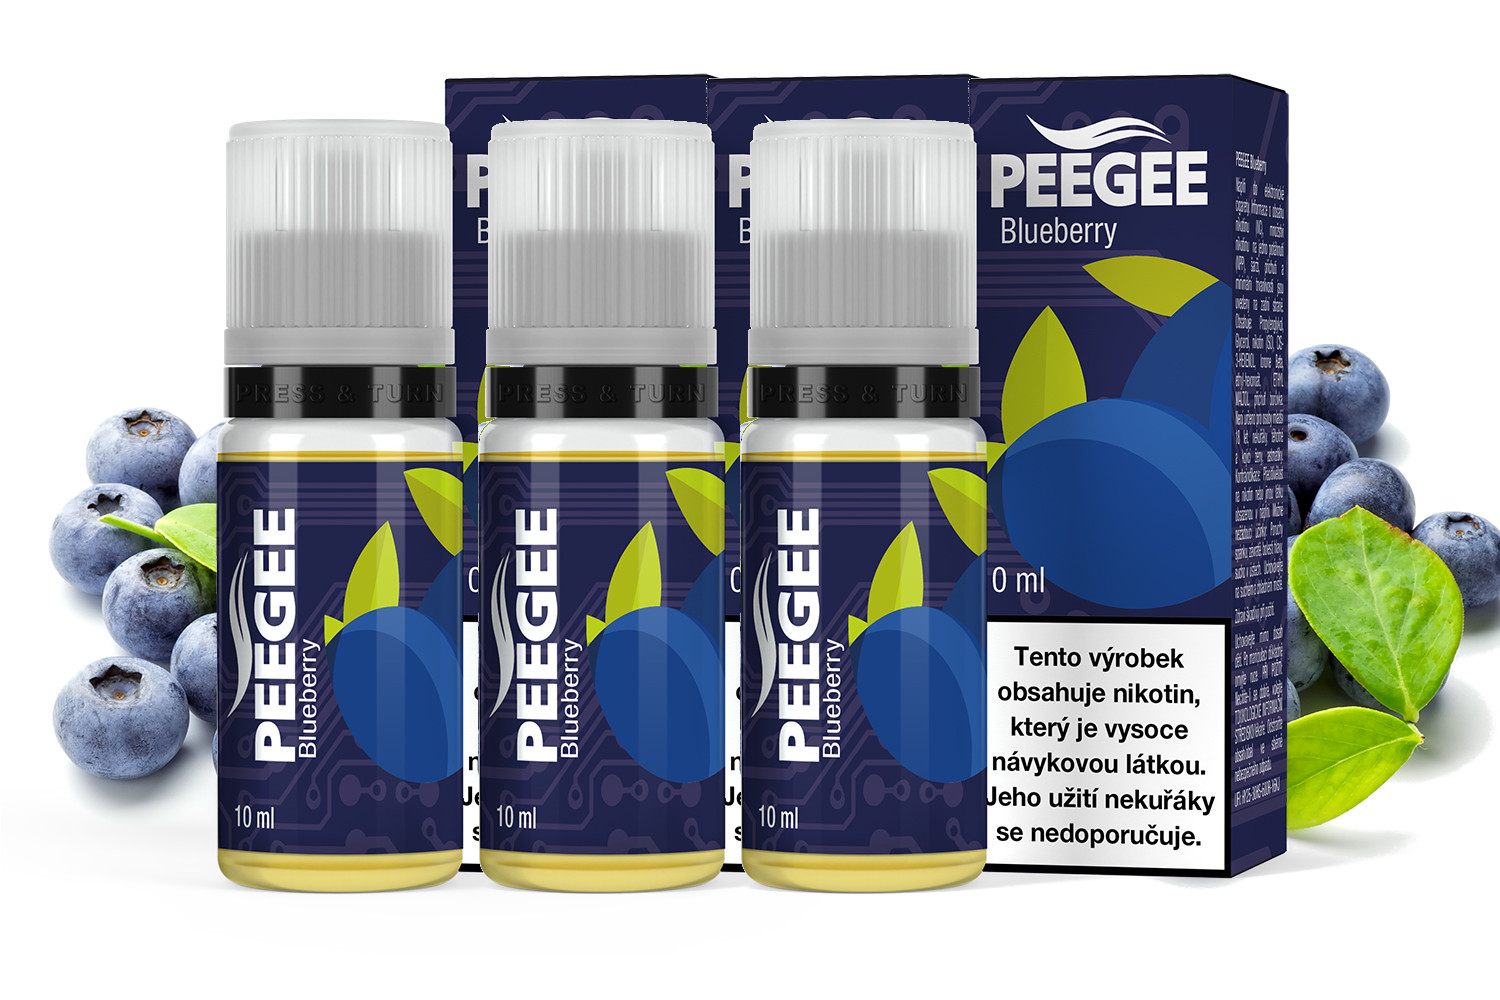 PEEGEE - Borůvka (Blueberry) 3x10ml Obsah nikotinu: 12mg